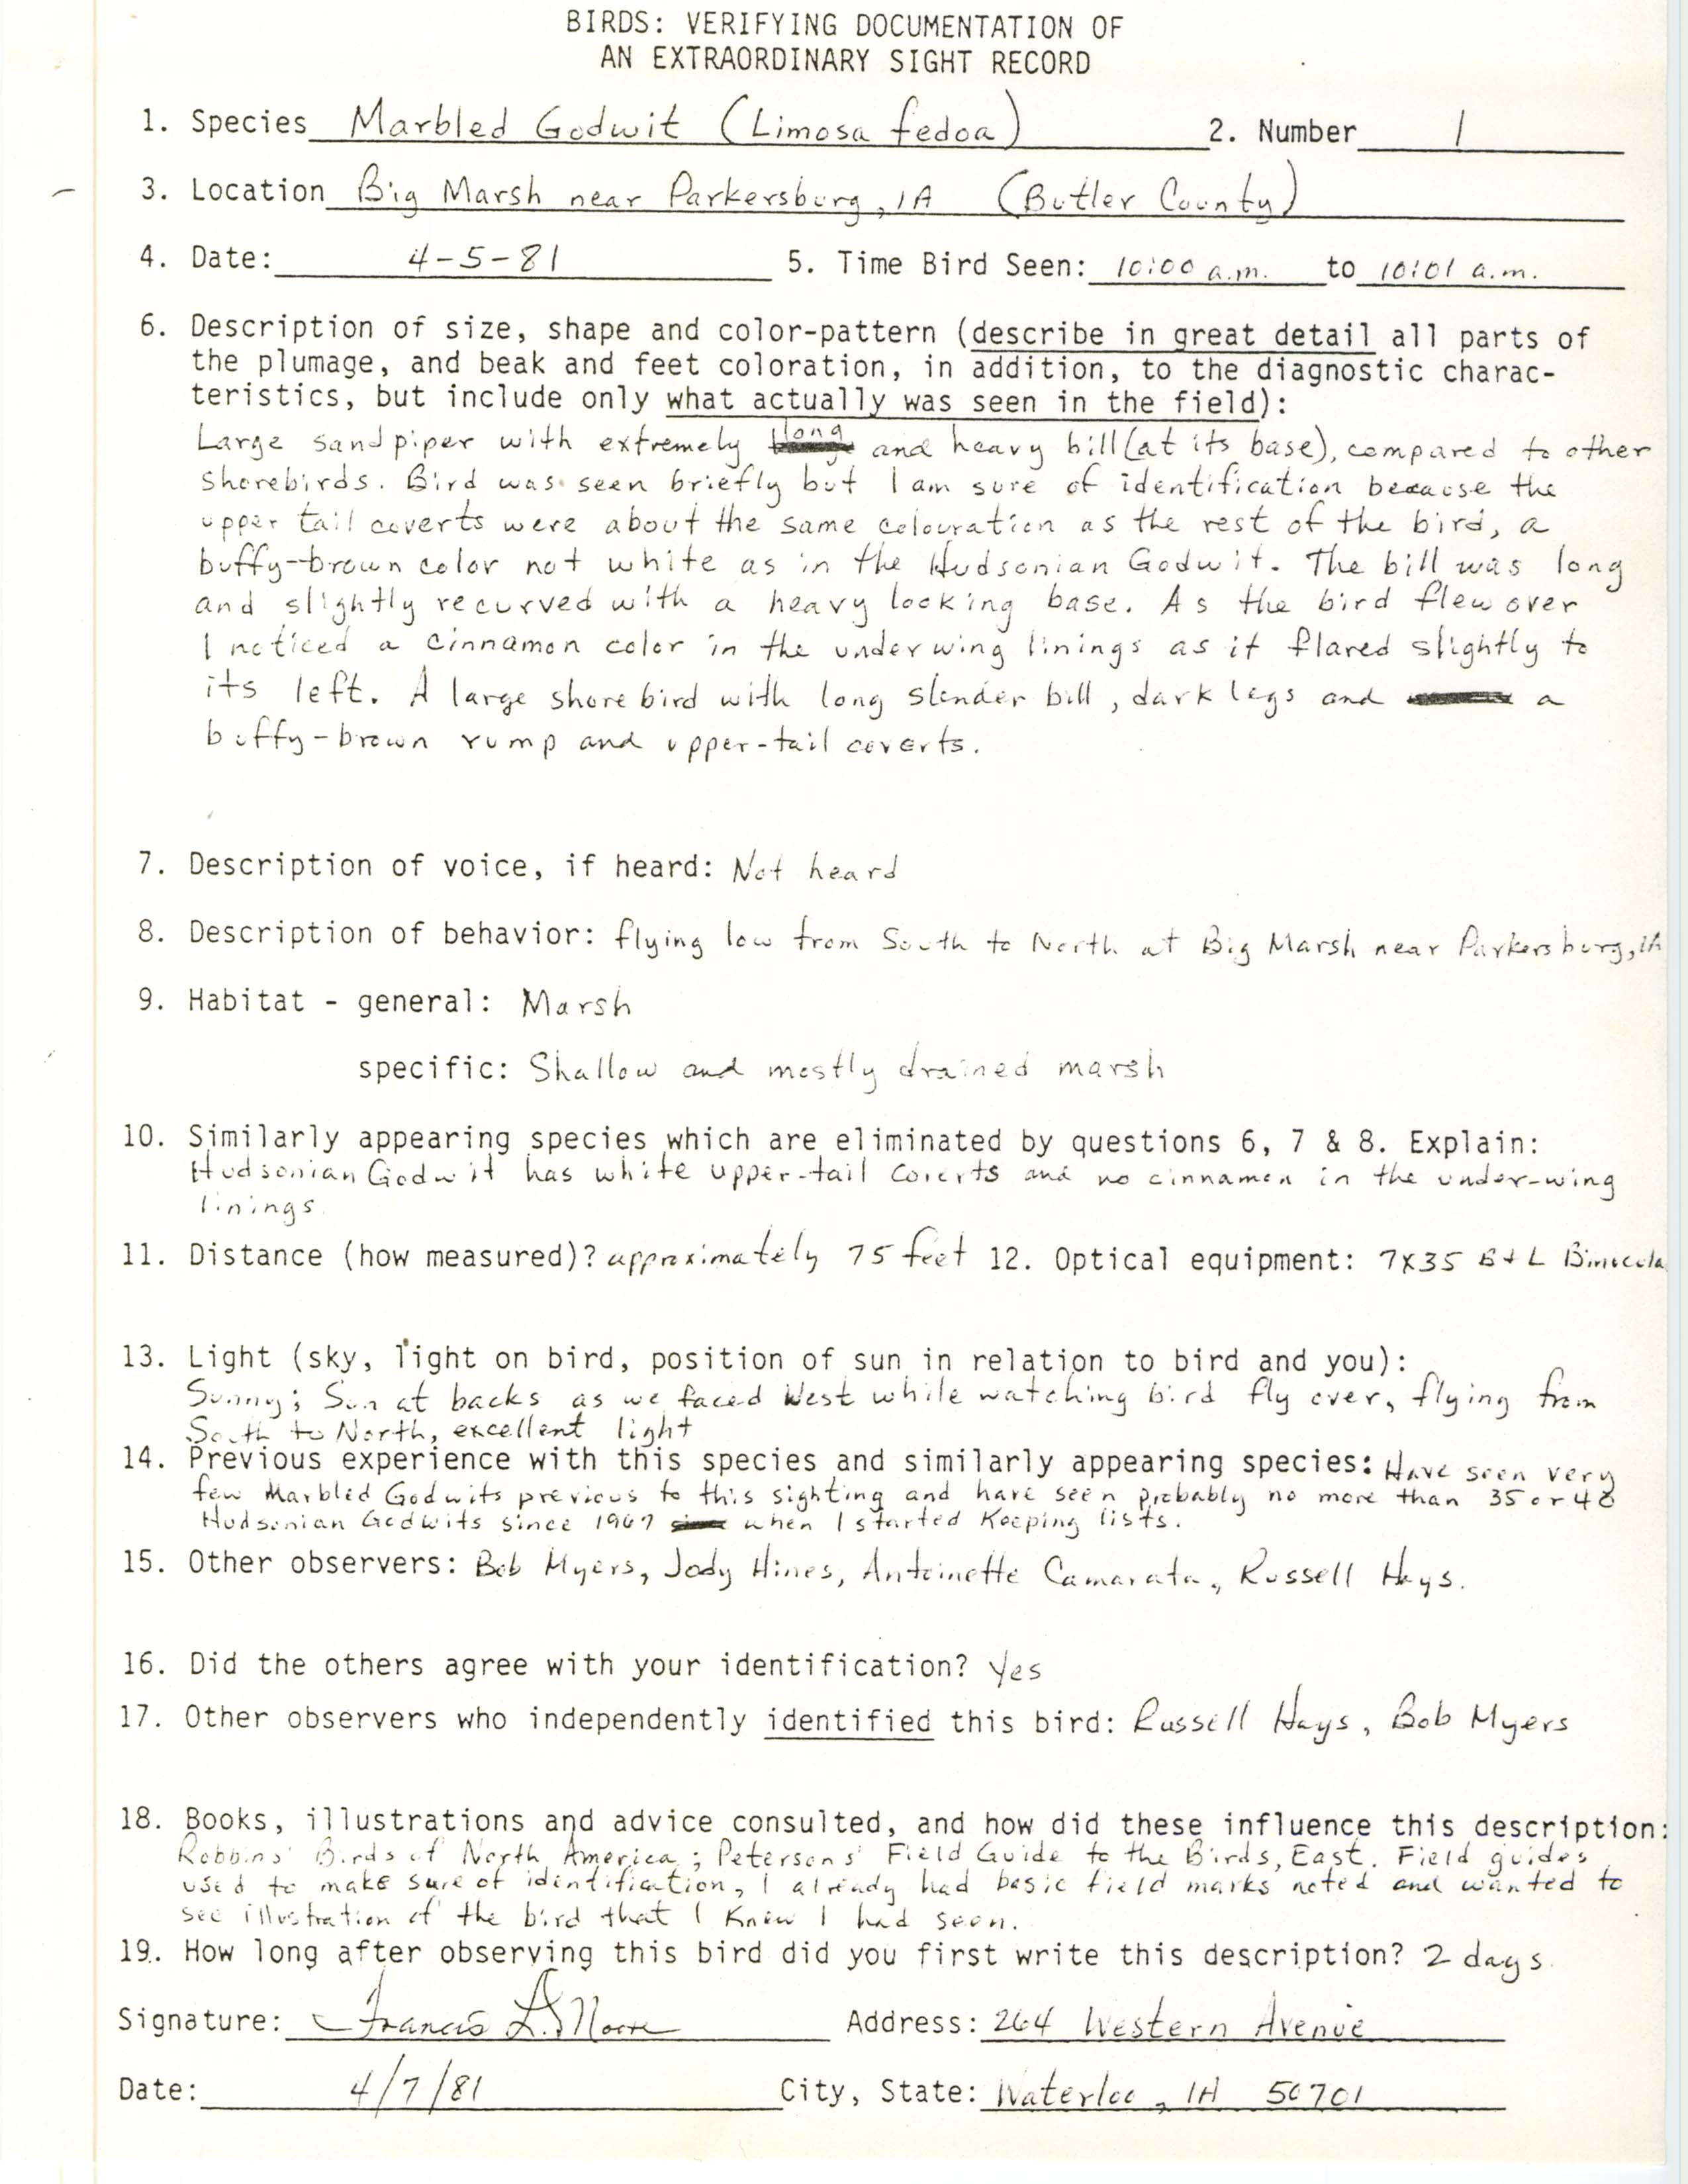 Rare bird documentation form for Marbled Godwit at Big Marsh near Parkersburg, 1981